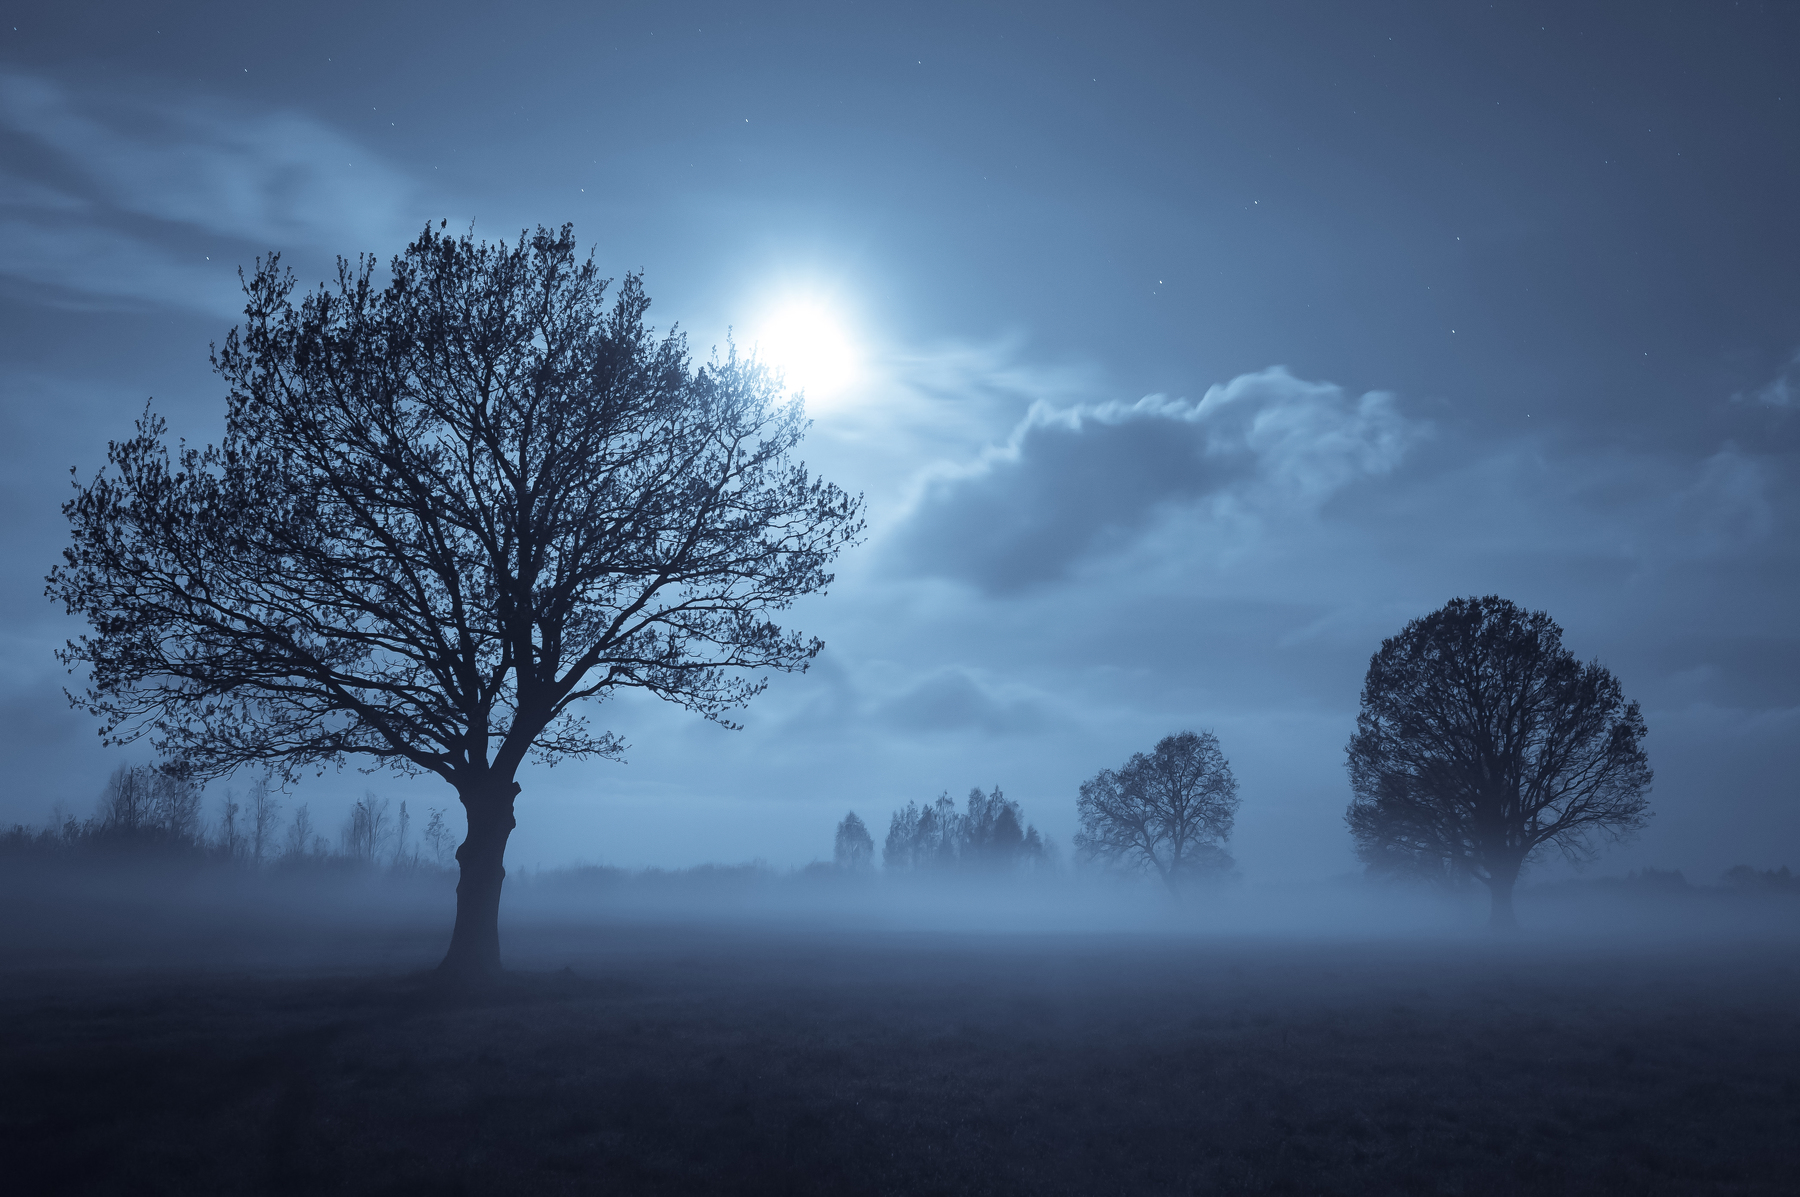 Aleksandr Hvozd Landscape Night Trees Desolate Moon Bright Sky Horizon Mist Stars 1800x1197